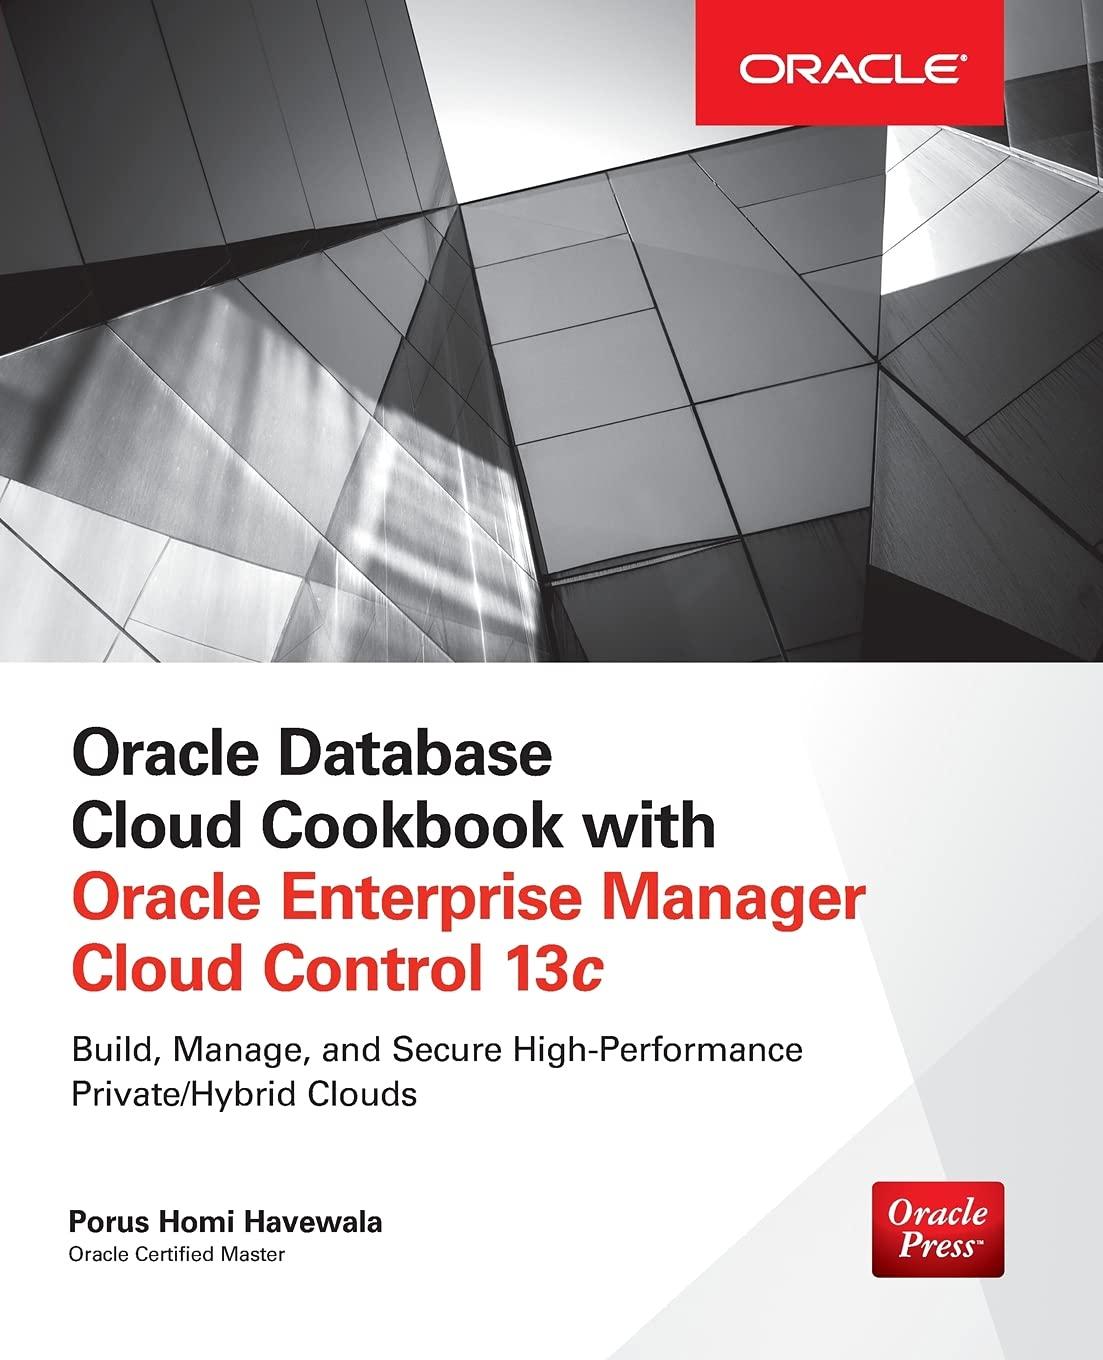 oracle database cloud cookbook with oracle enterprise manager 13c cloud control 1st edition porus homi